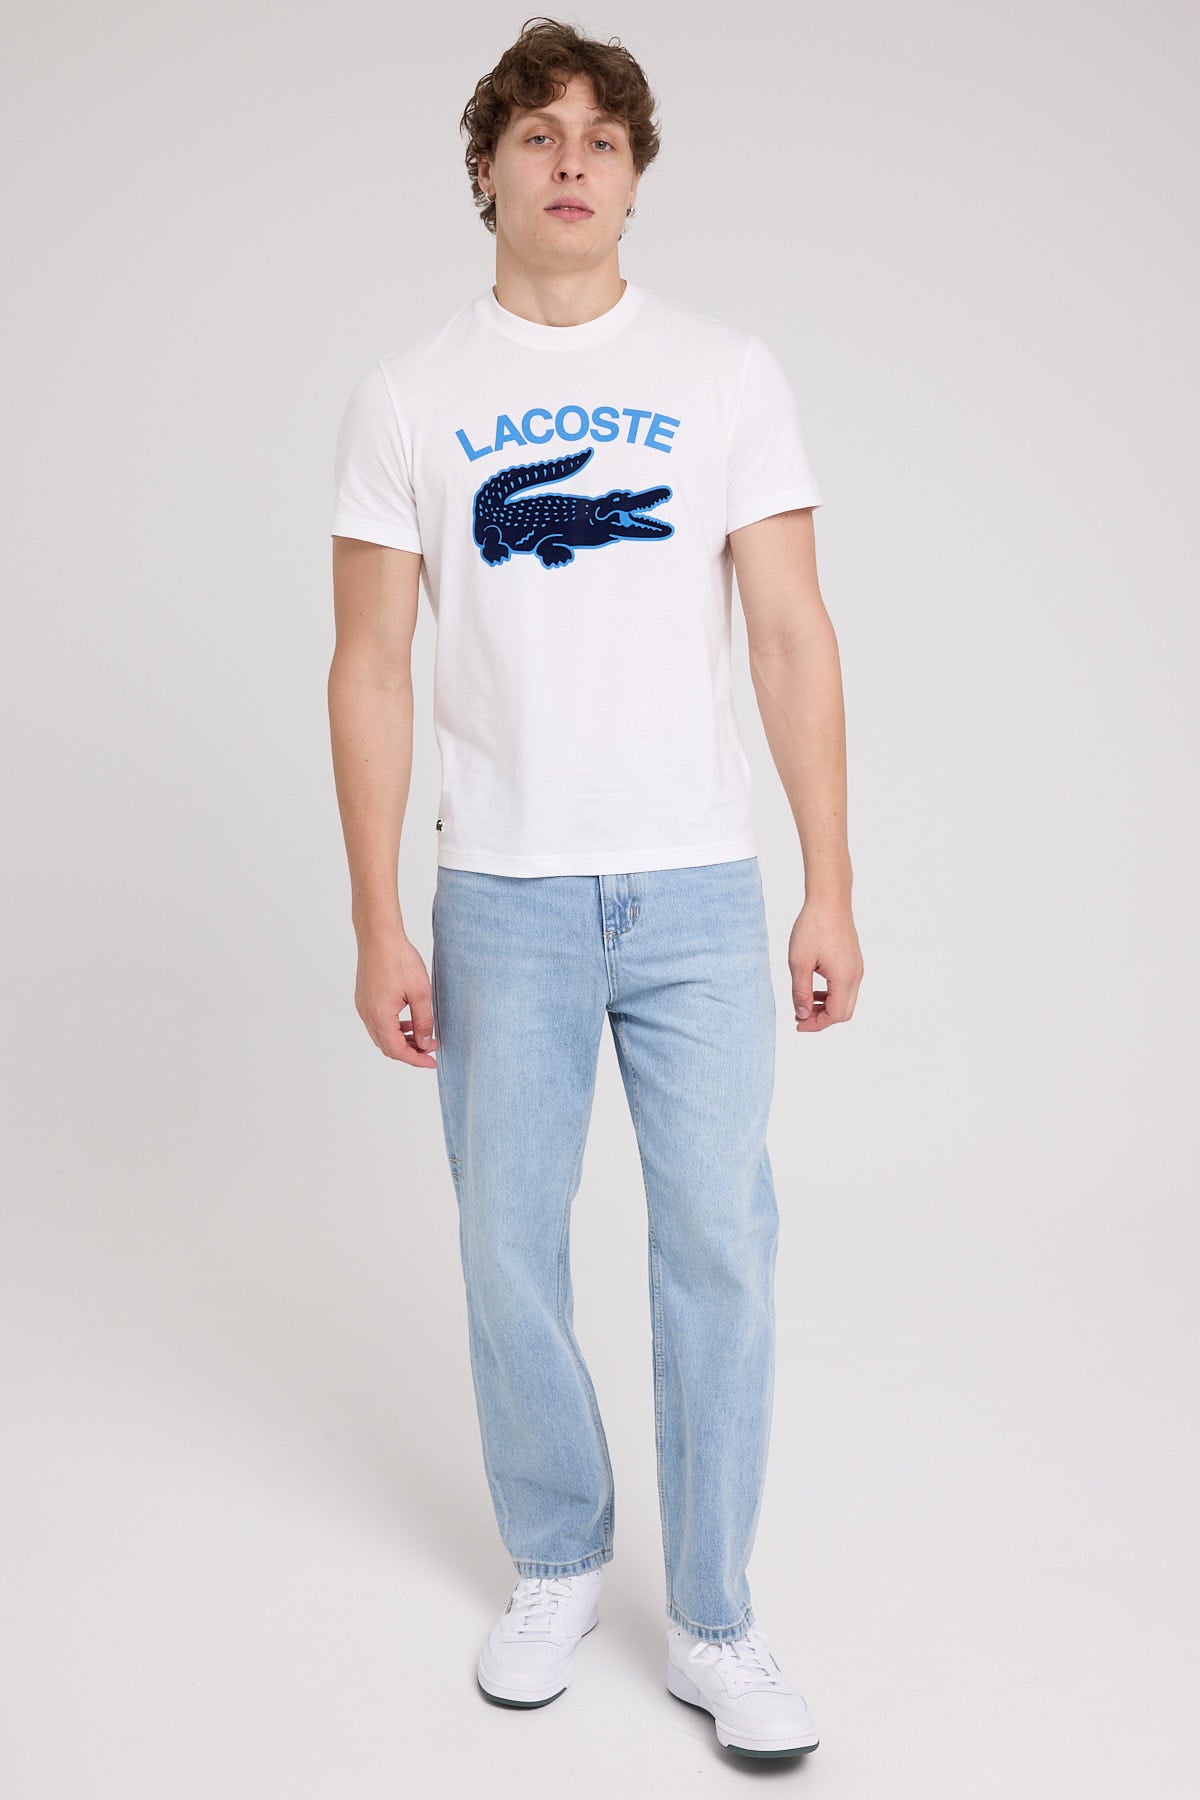 Lacoste Graphic Big Croc T-Shirt White